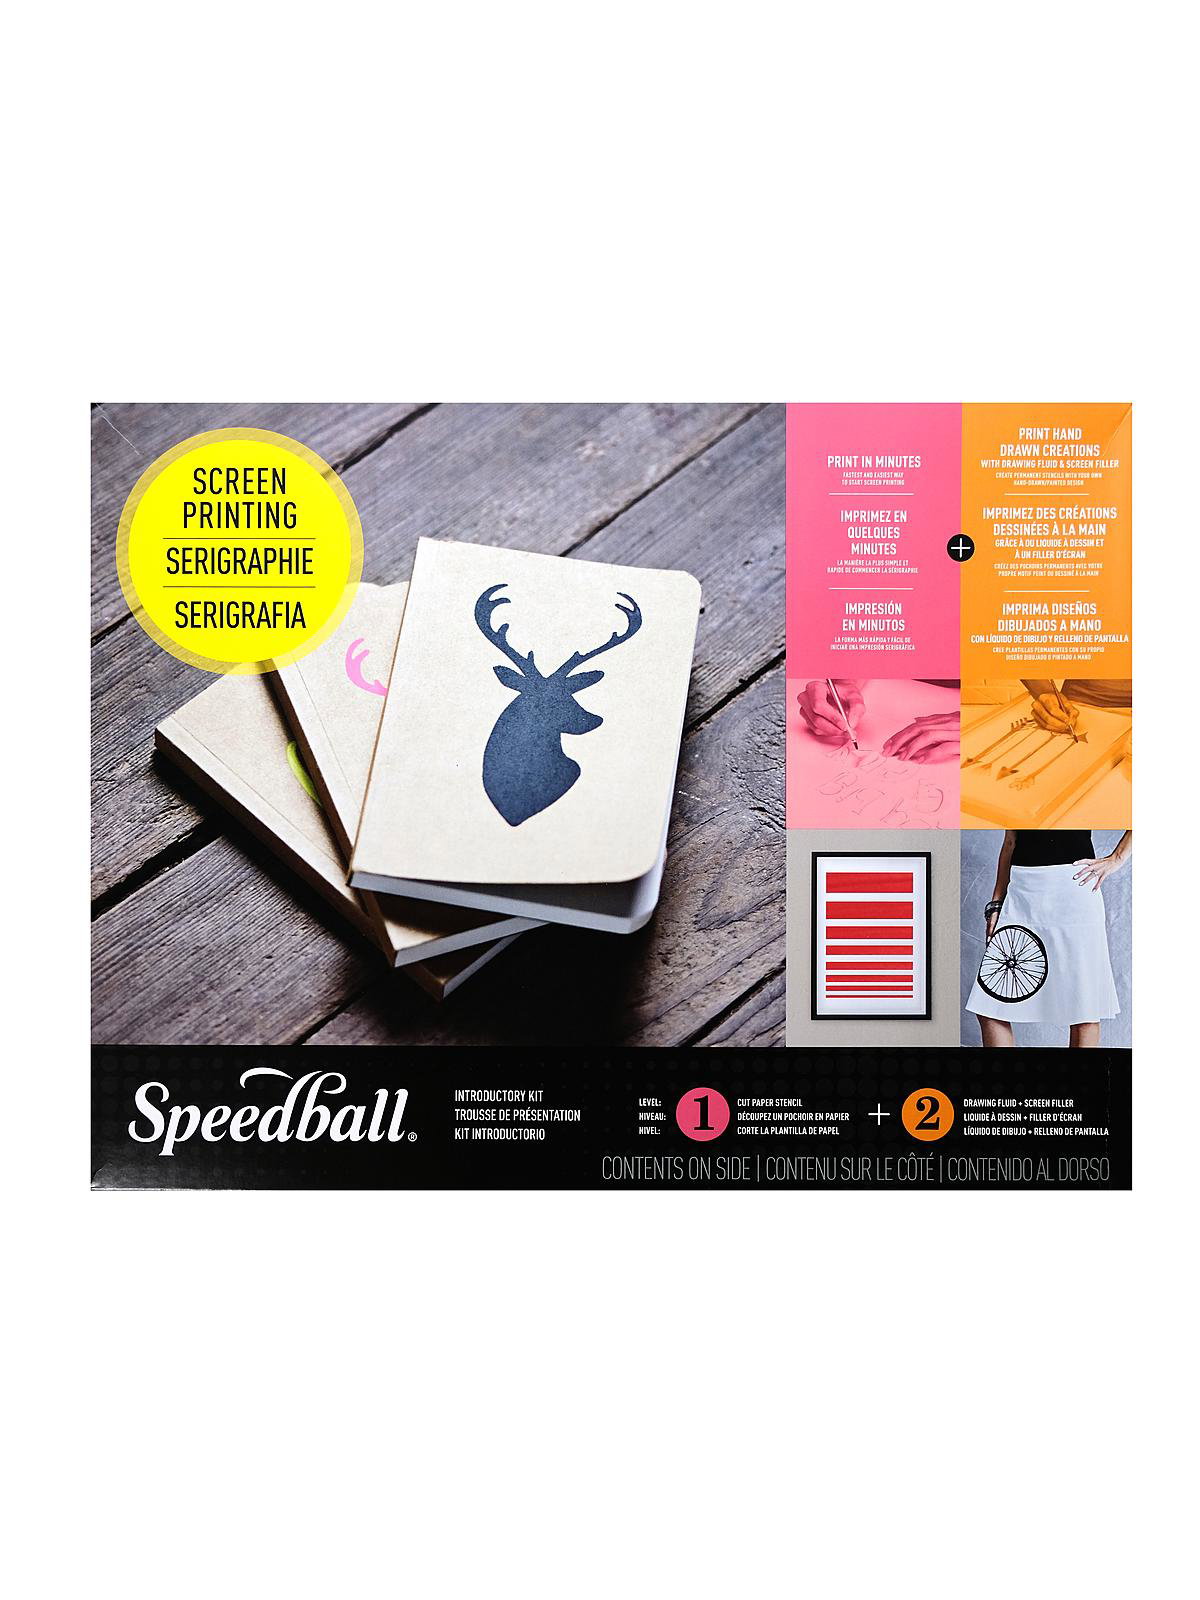 Speedball Advanced AllInOne Fabric Screen Printing Kit